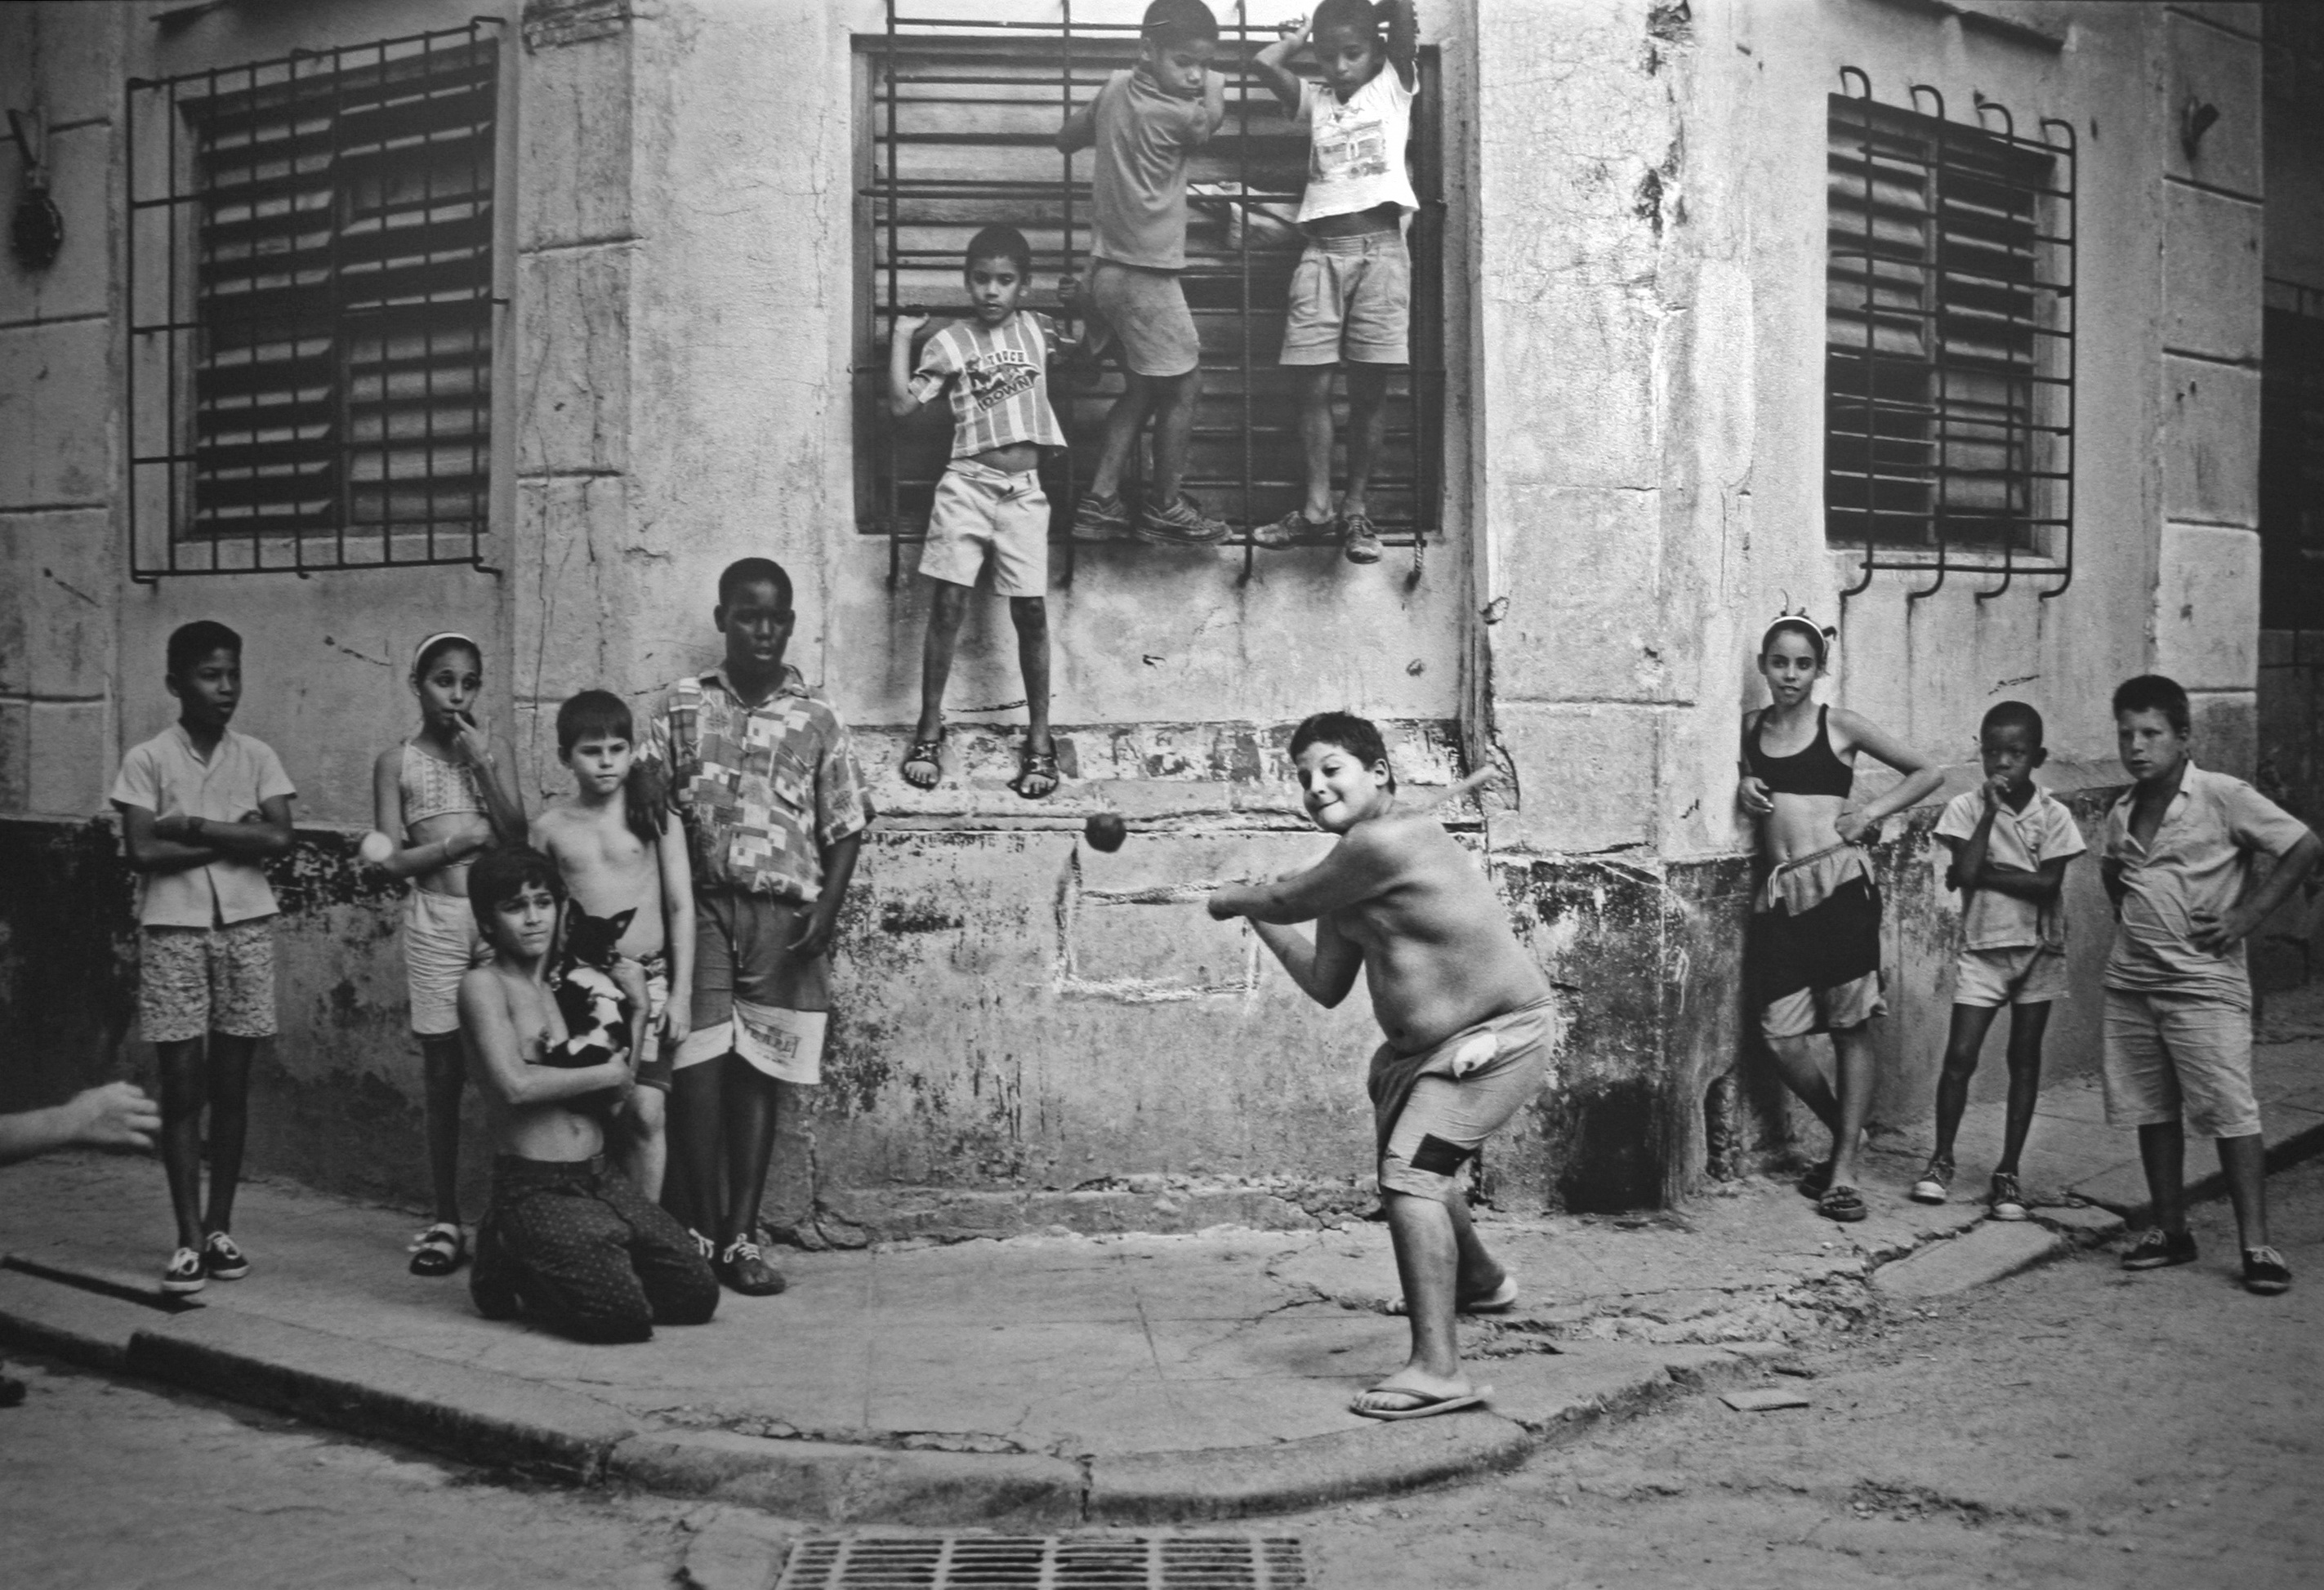 File:Boys Playing Stickball, Havana, Cuba, 1999.jpg - Wikimedia Commons